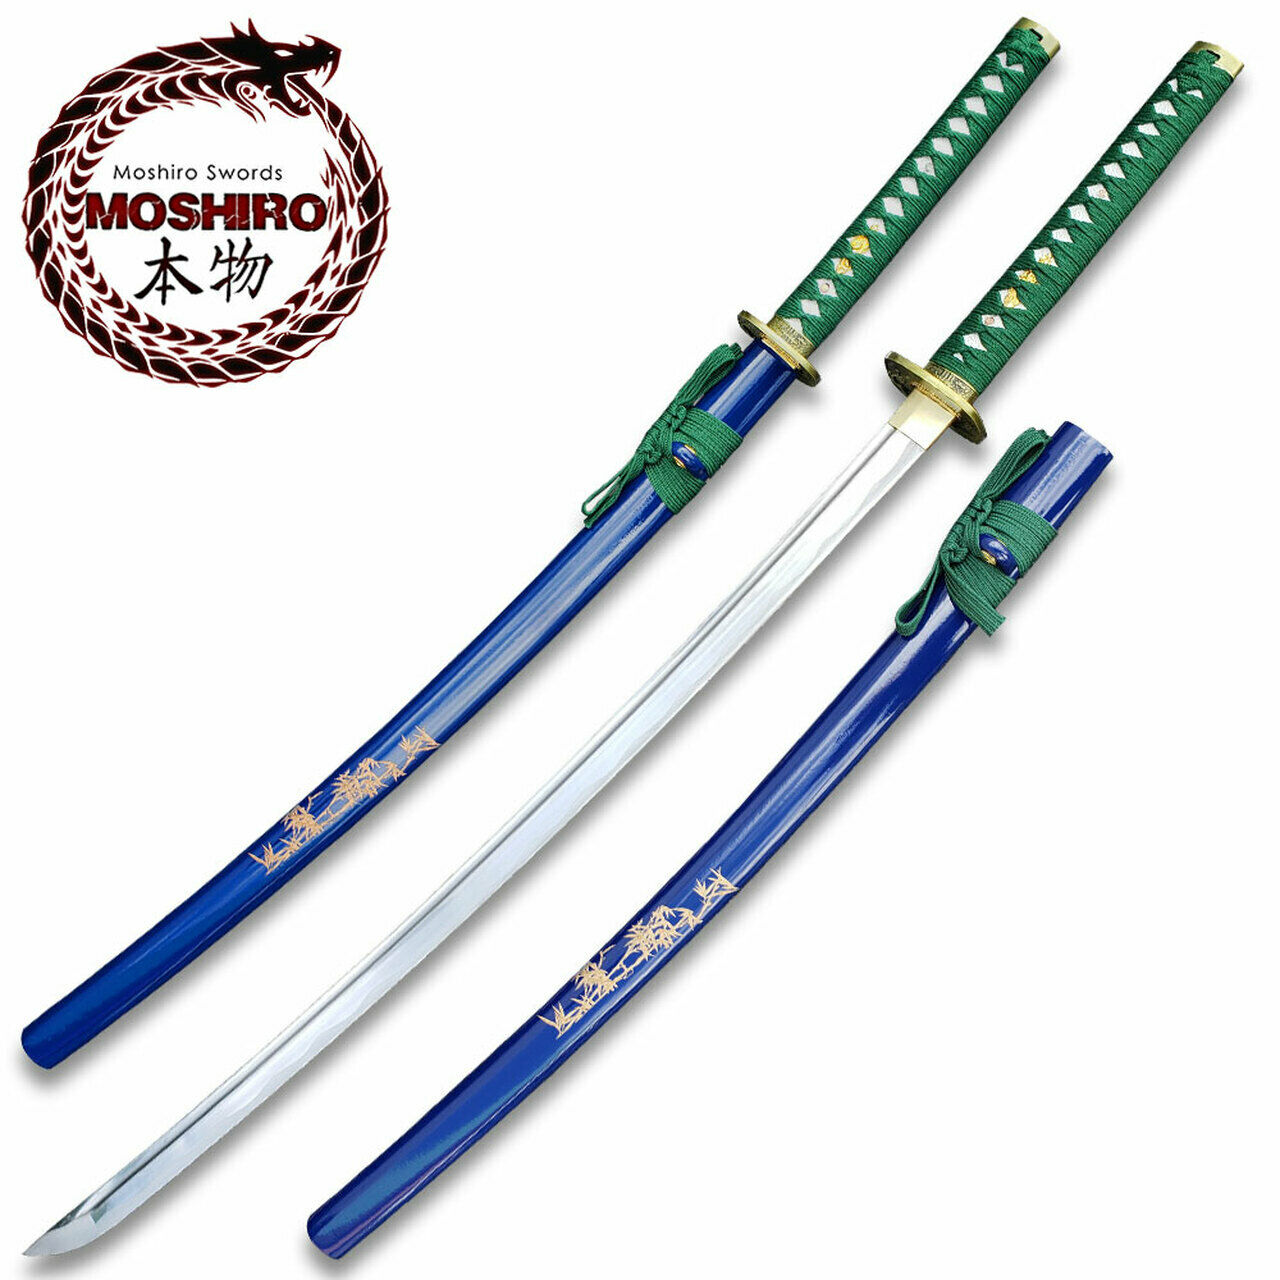 MOSHIRO Brand 1045 Steel Handmade Katana With Bamboo Engraved on Blue Scabbard